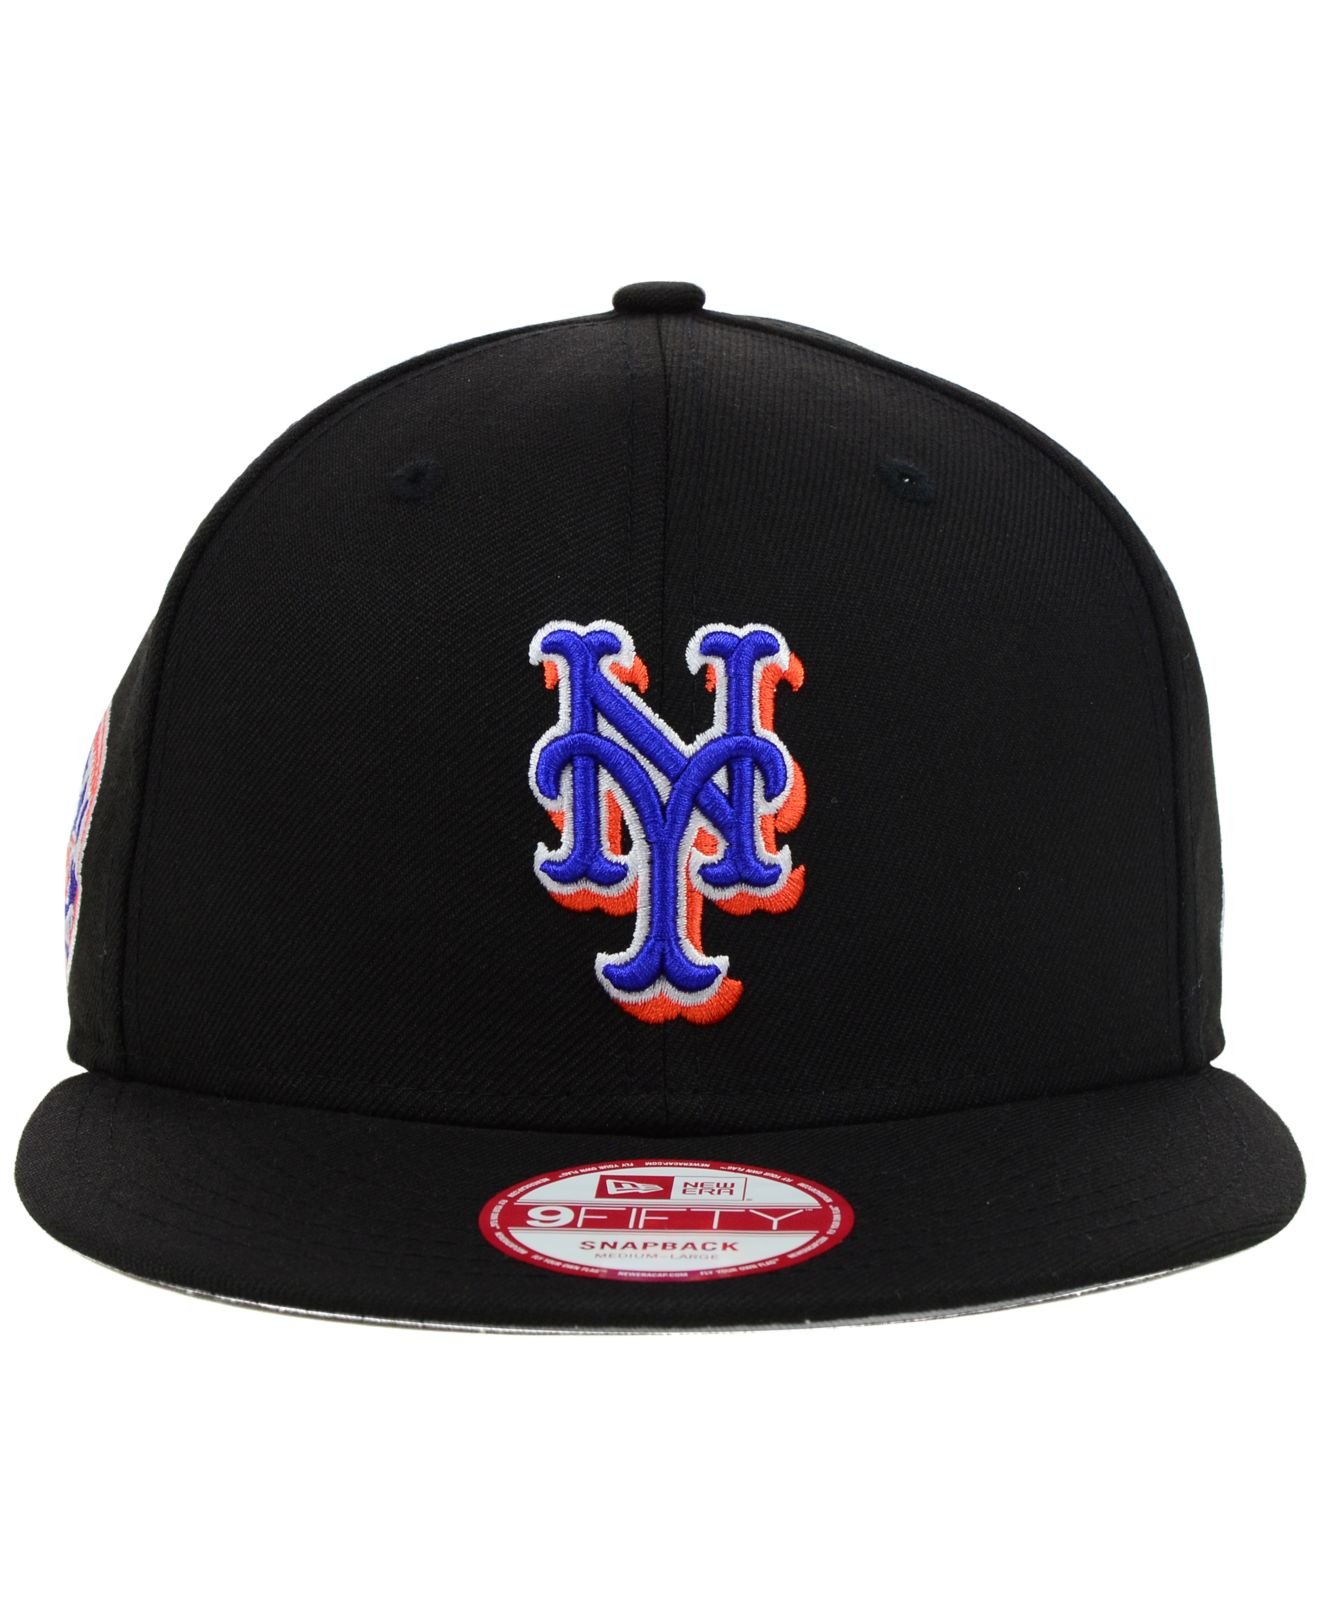 Ktz New York Mets Mlb 2 Tone Link 9fifty Snapback Cap in Black for Men